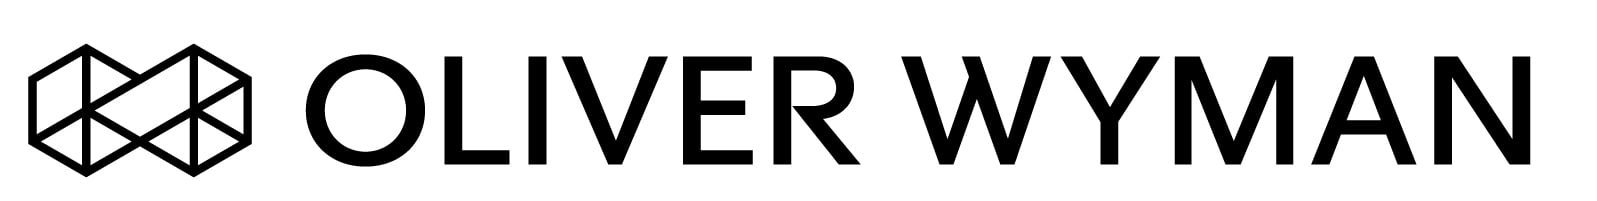 Oliver-wyman-logo-2019